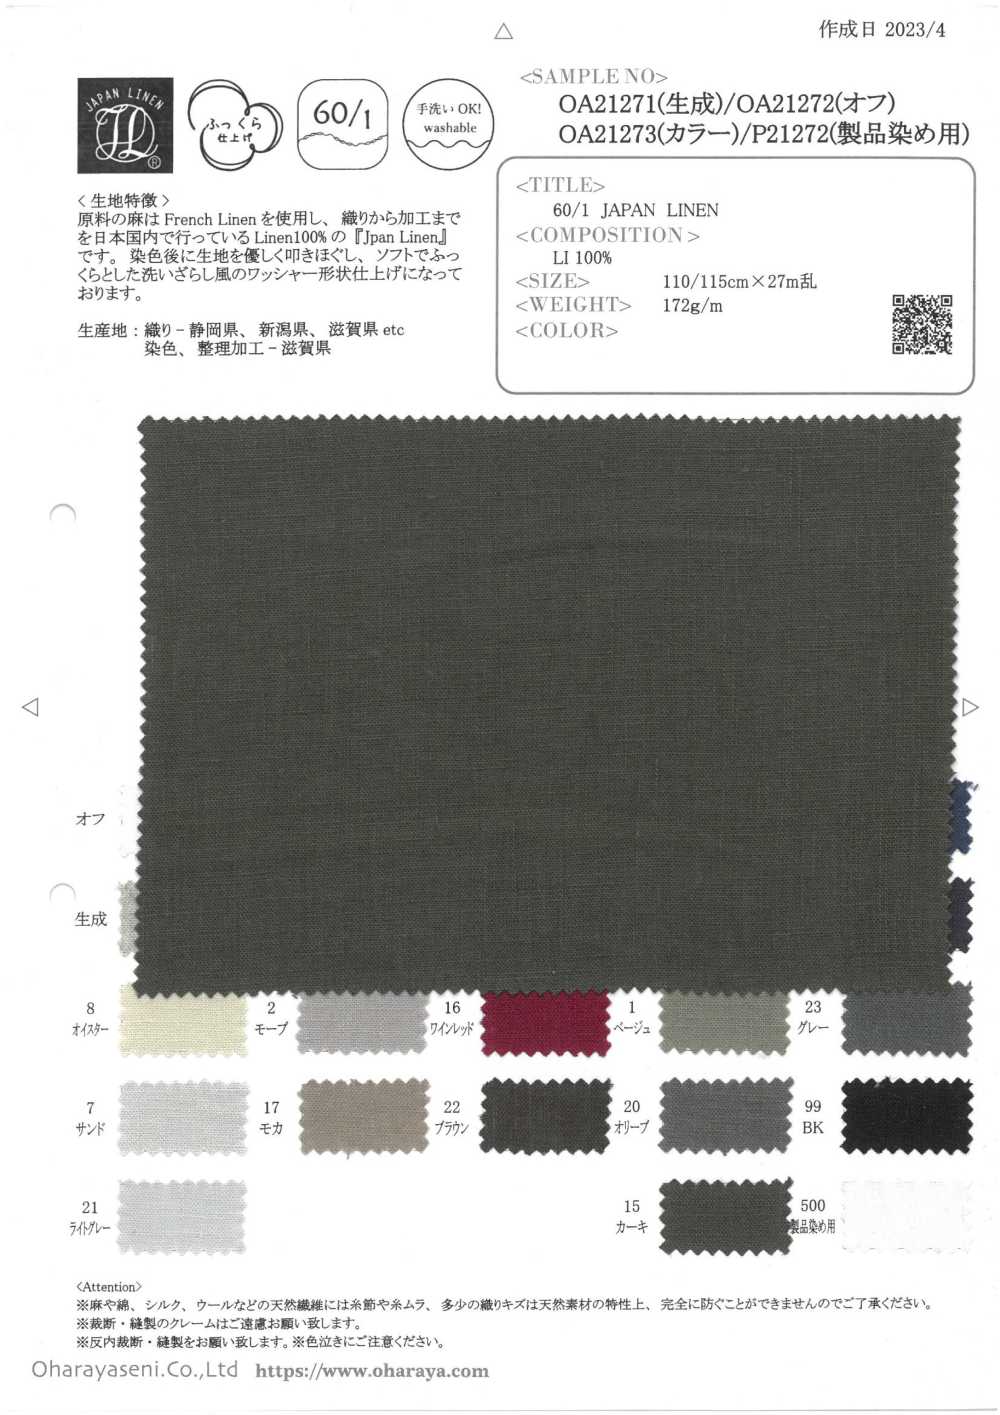 OA21271 60/1・LINO JAPÓN (Crudo)[Fabrica Textil] Oharayaseni